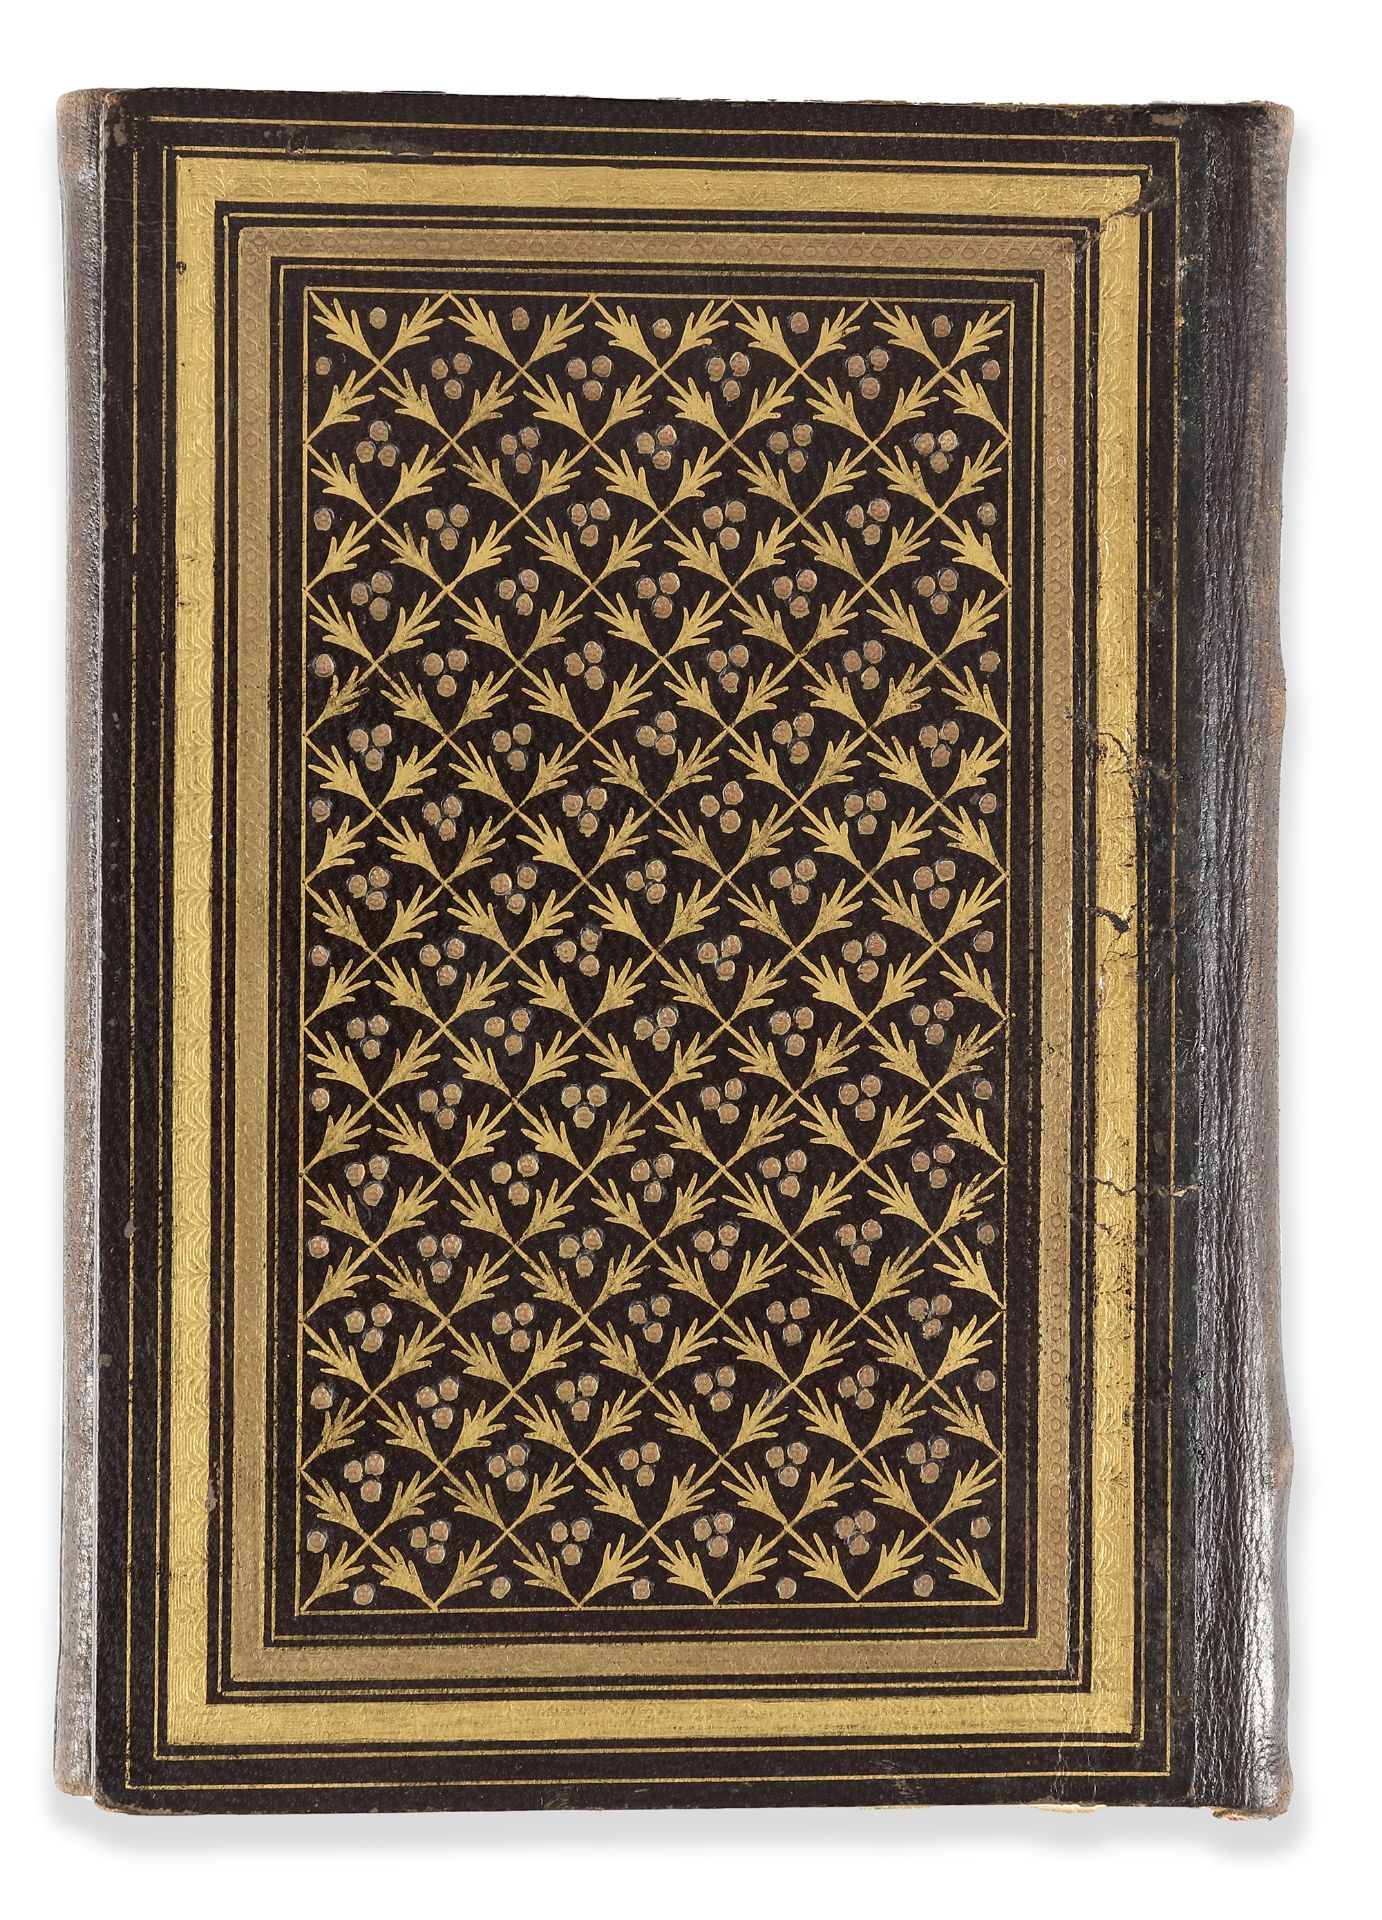 AN ILLUMINATED OTTOMAN QURAN BY HAFIZ ISMAIL HAKKI, TURKEY, 1272 AH/1855 AD - Image 4 of 4